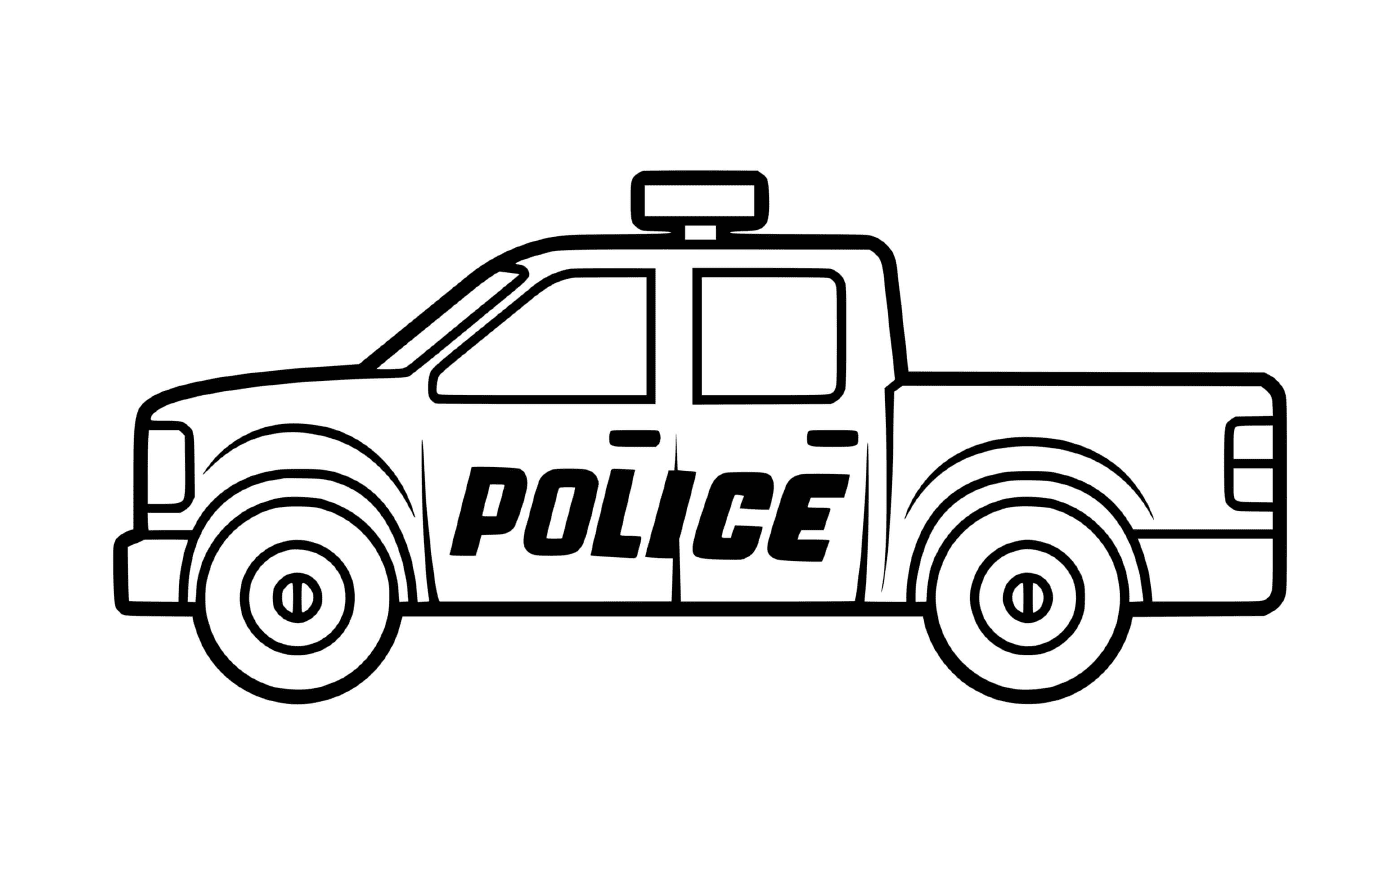  4x4 gendarmerie, police vehicle 